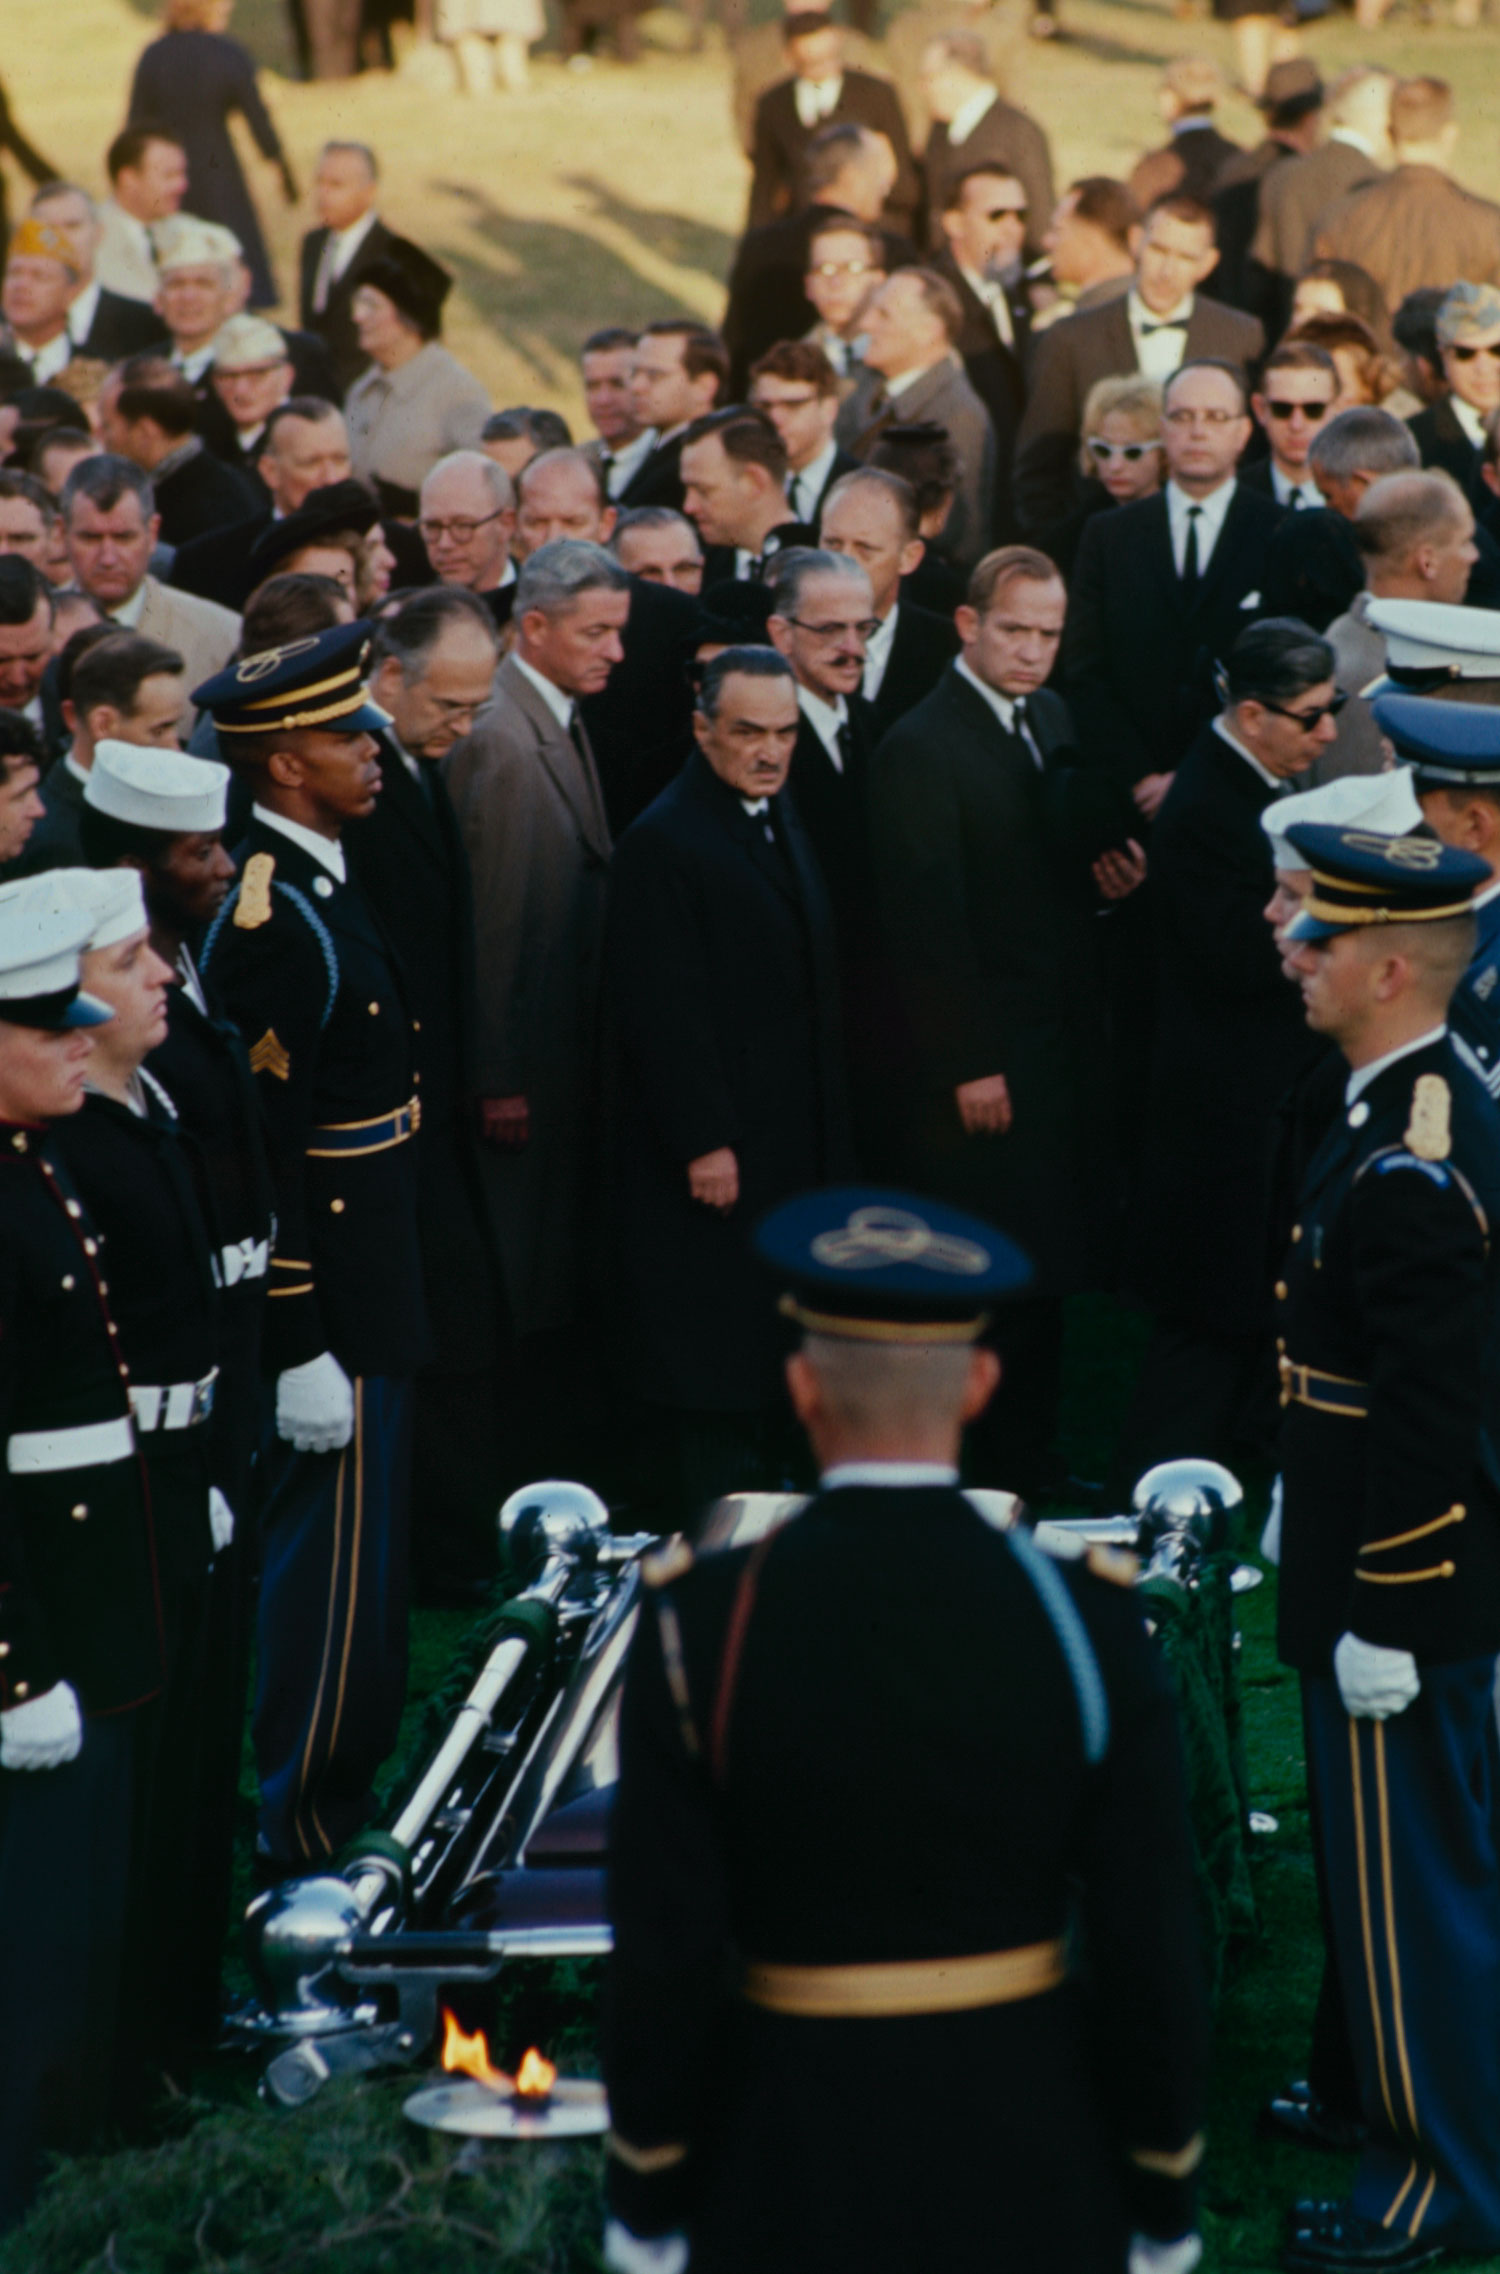 John F. Kennedy's funeral, Arlington Cemetery, November 25, 1963.